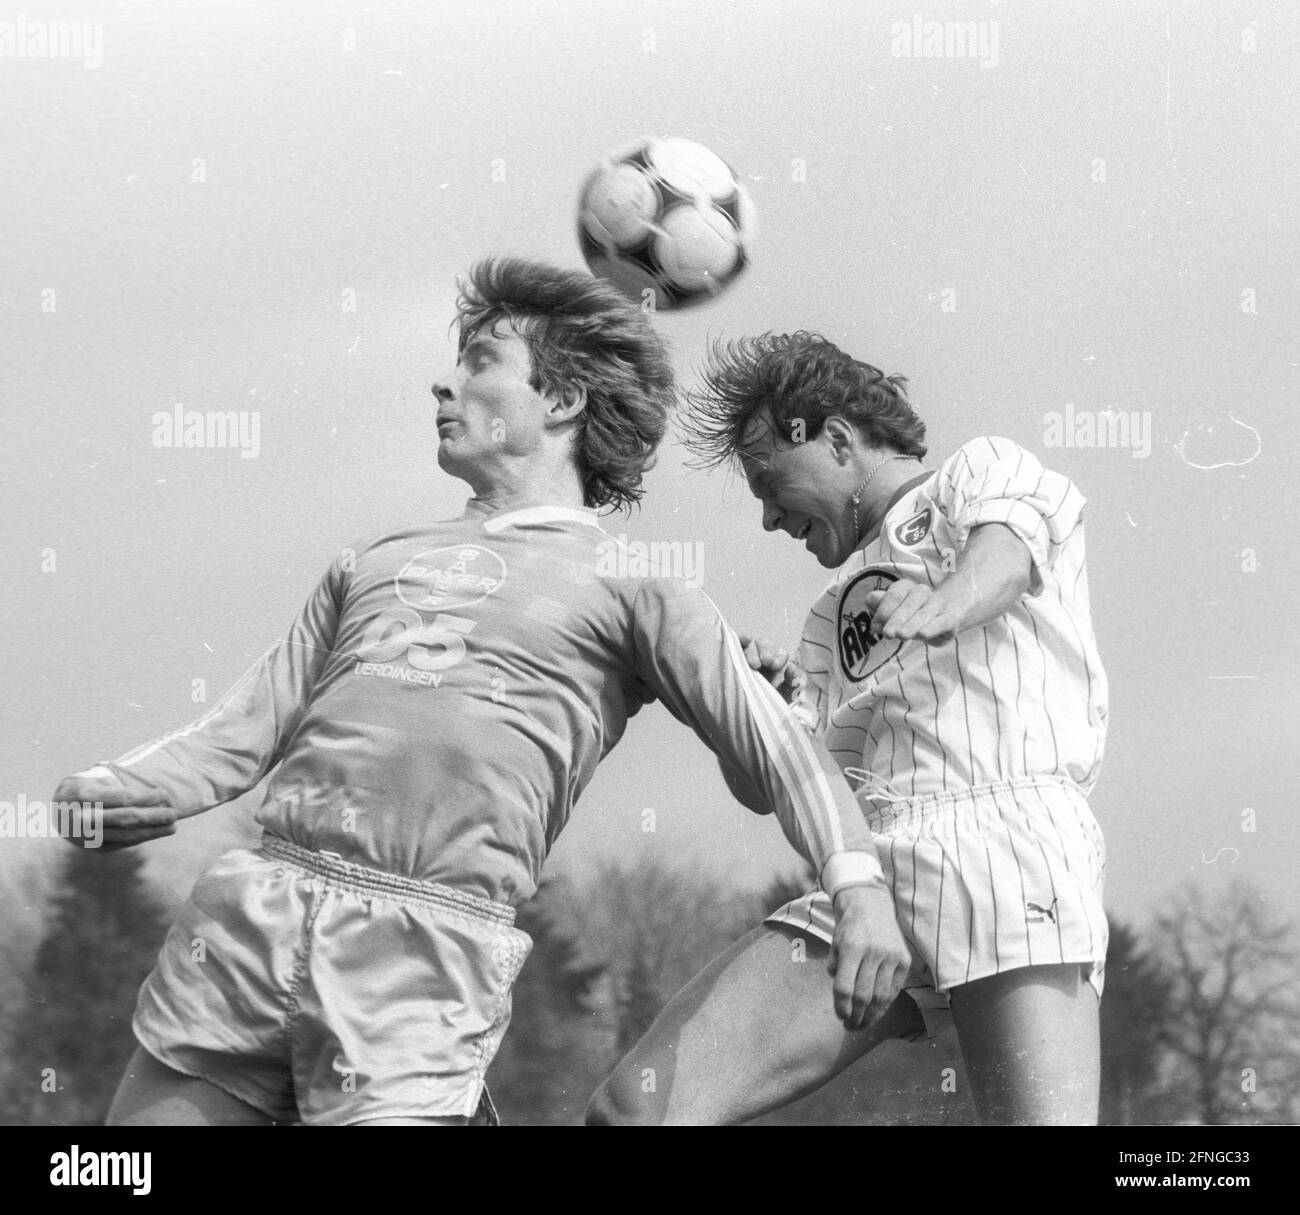 Bayer Uerdingen - Fortuna Düsseldorf 5:2 on 26.04.1986 header duel Atli Edvaldsson (Bayer) and Holmquist (right F95) [automated translation] Stock Photo